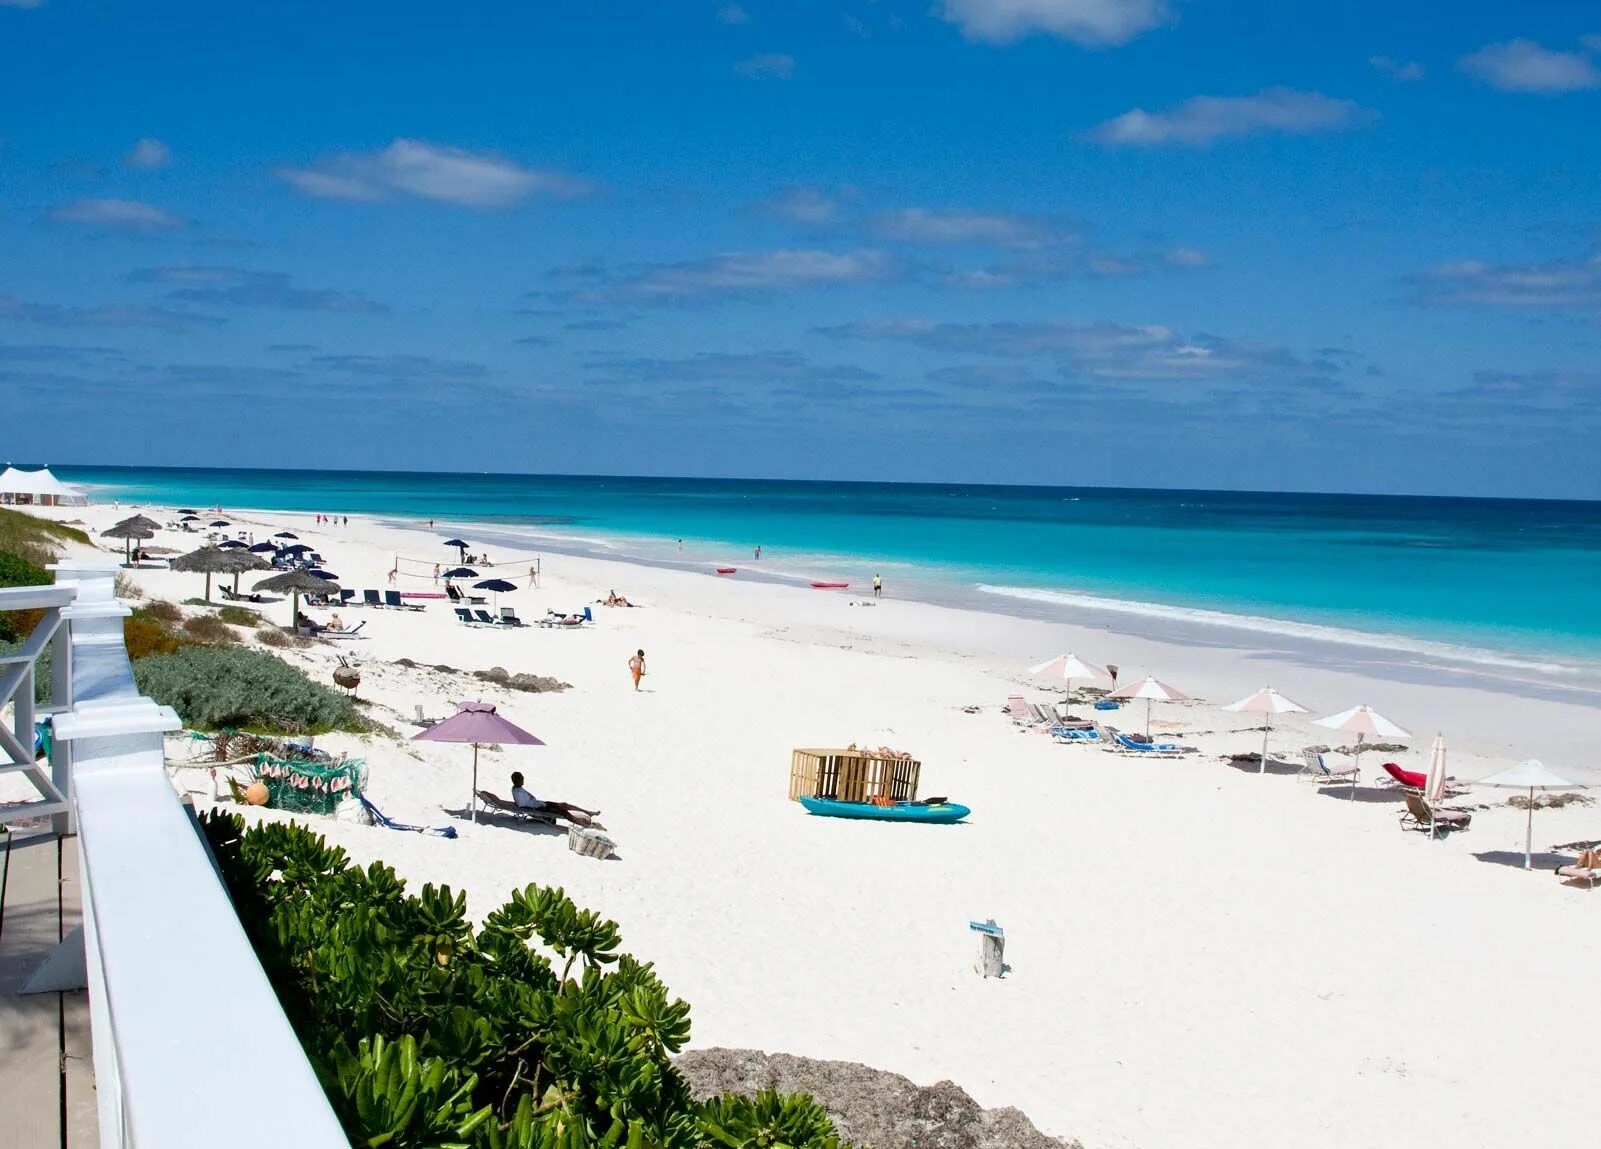 Харбор Айленд Багамы. Эльютера Багамы. Багамские острова розовый пляж. Марш Харбор, остров Абако, Багамские острова. Harbor island